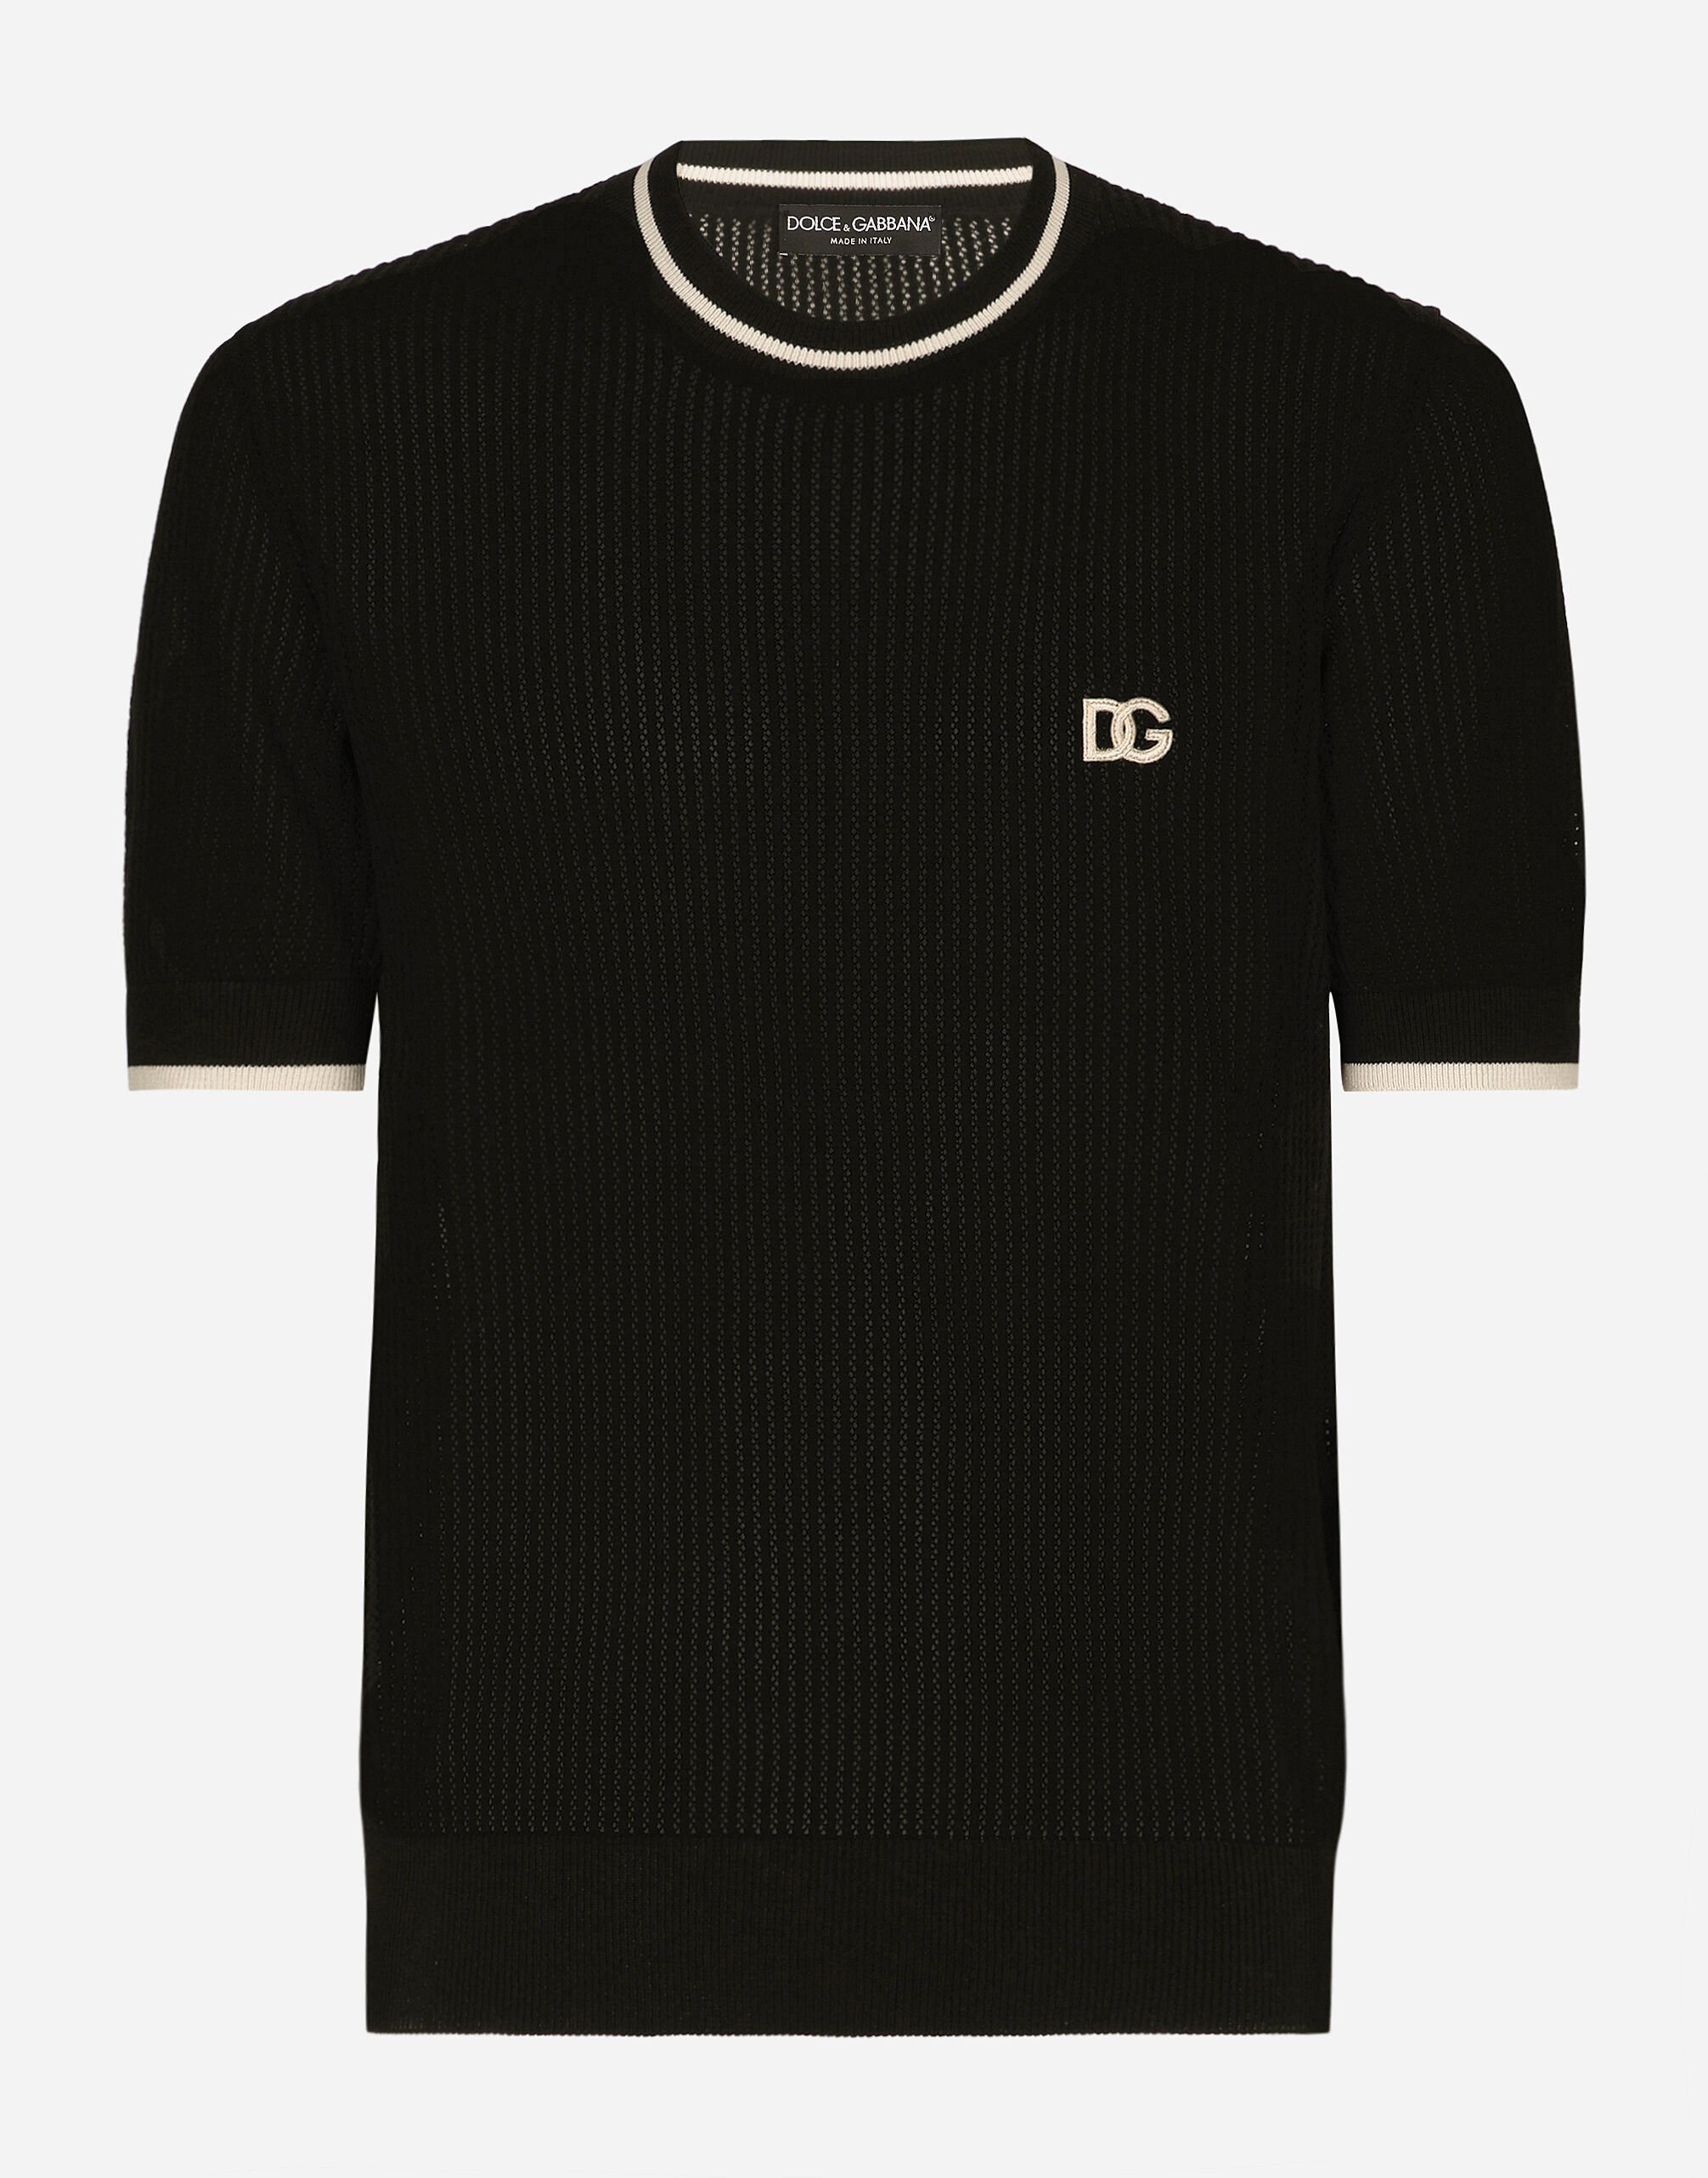 Dolce & Gabbana Round-neck cotton sweater with DG logo Print G5JH9THI1S8